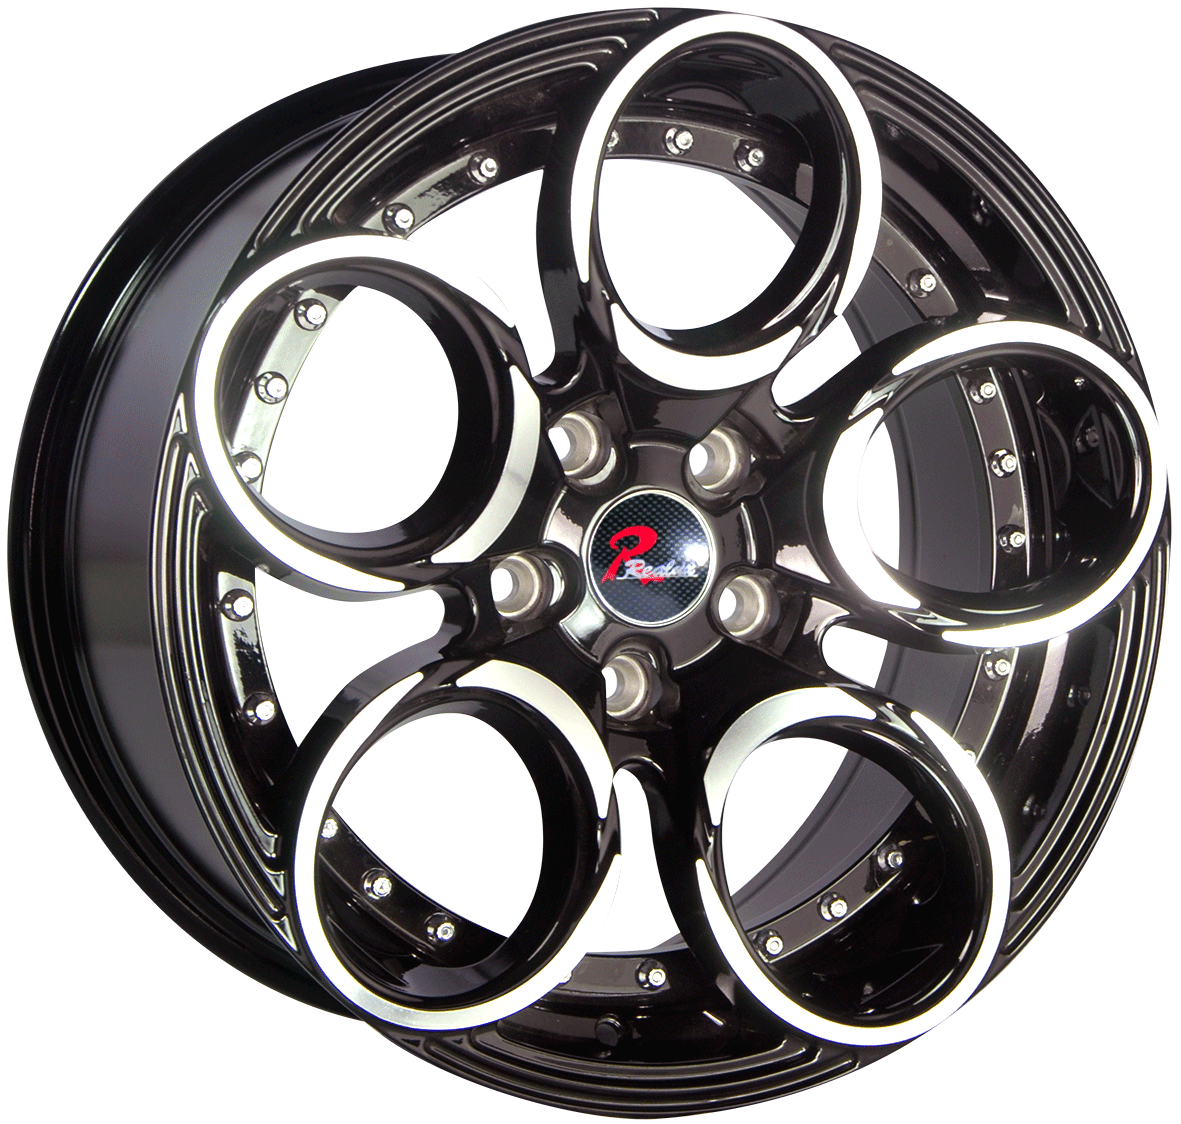 177.5 178.5 inch Semi Matte Black machine face/chrome stud wheel rim